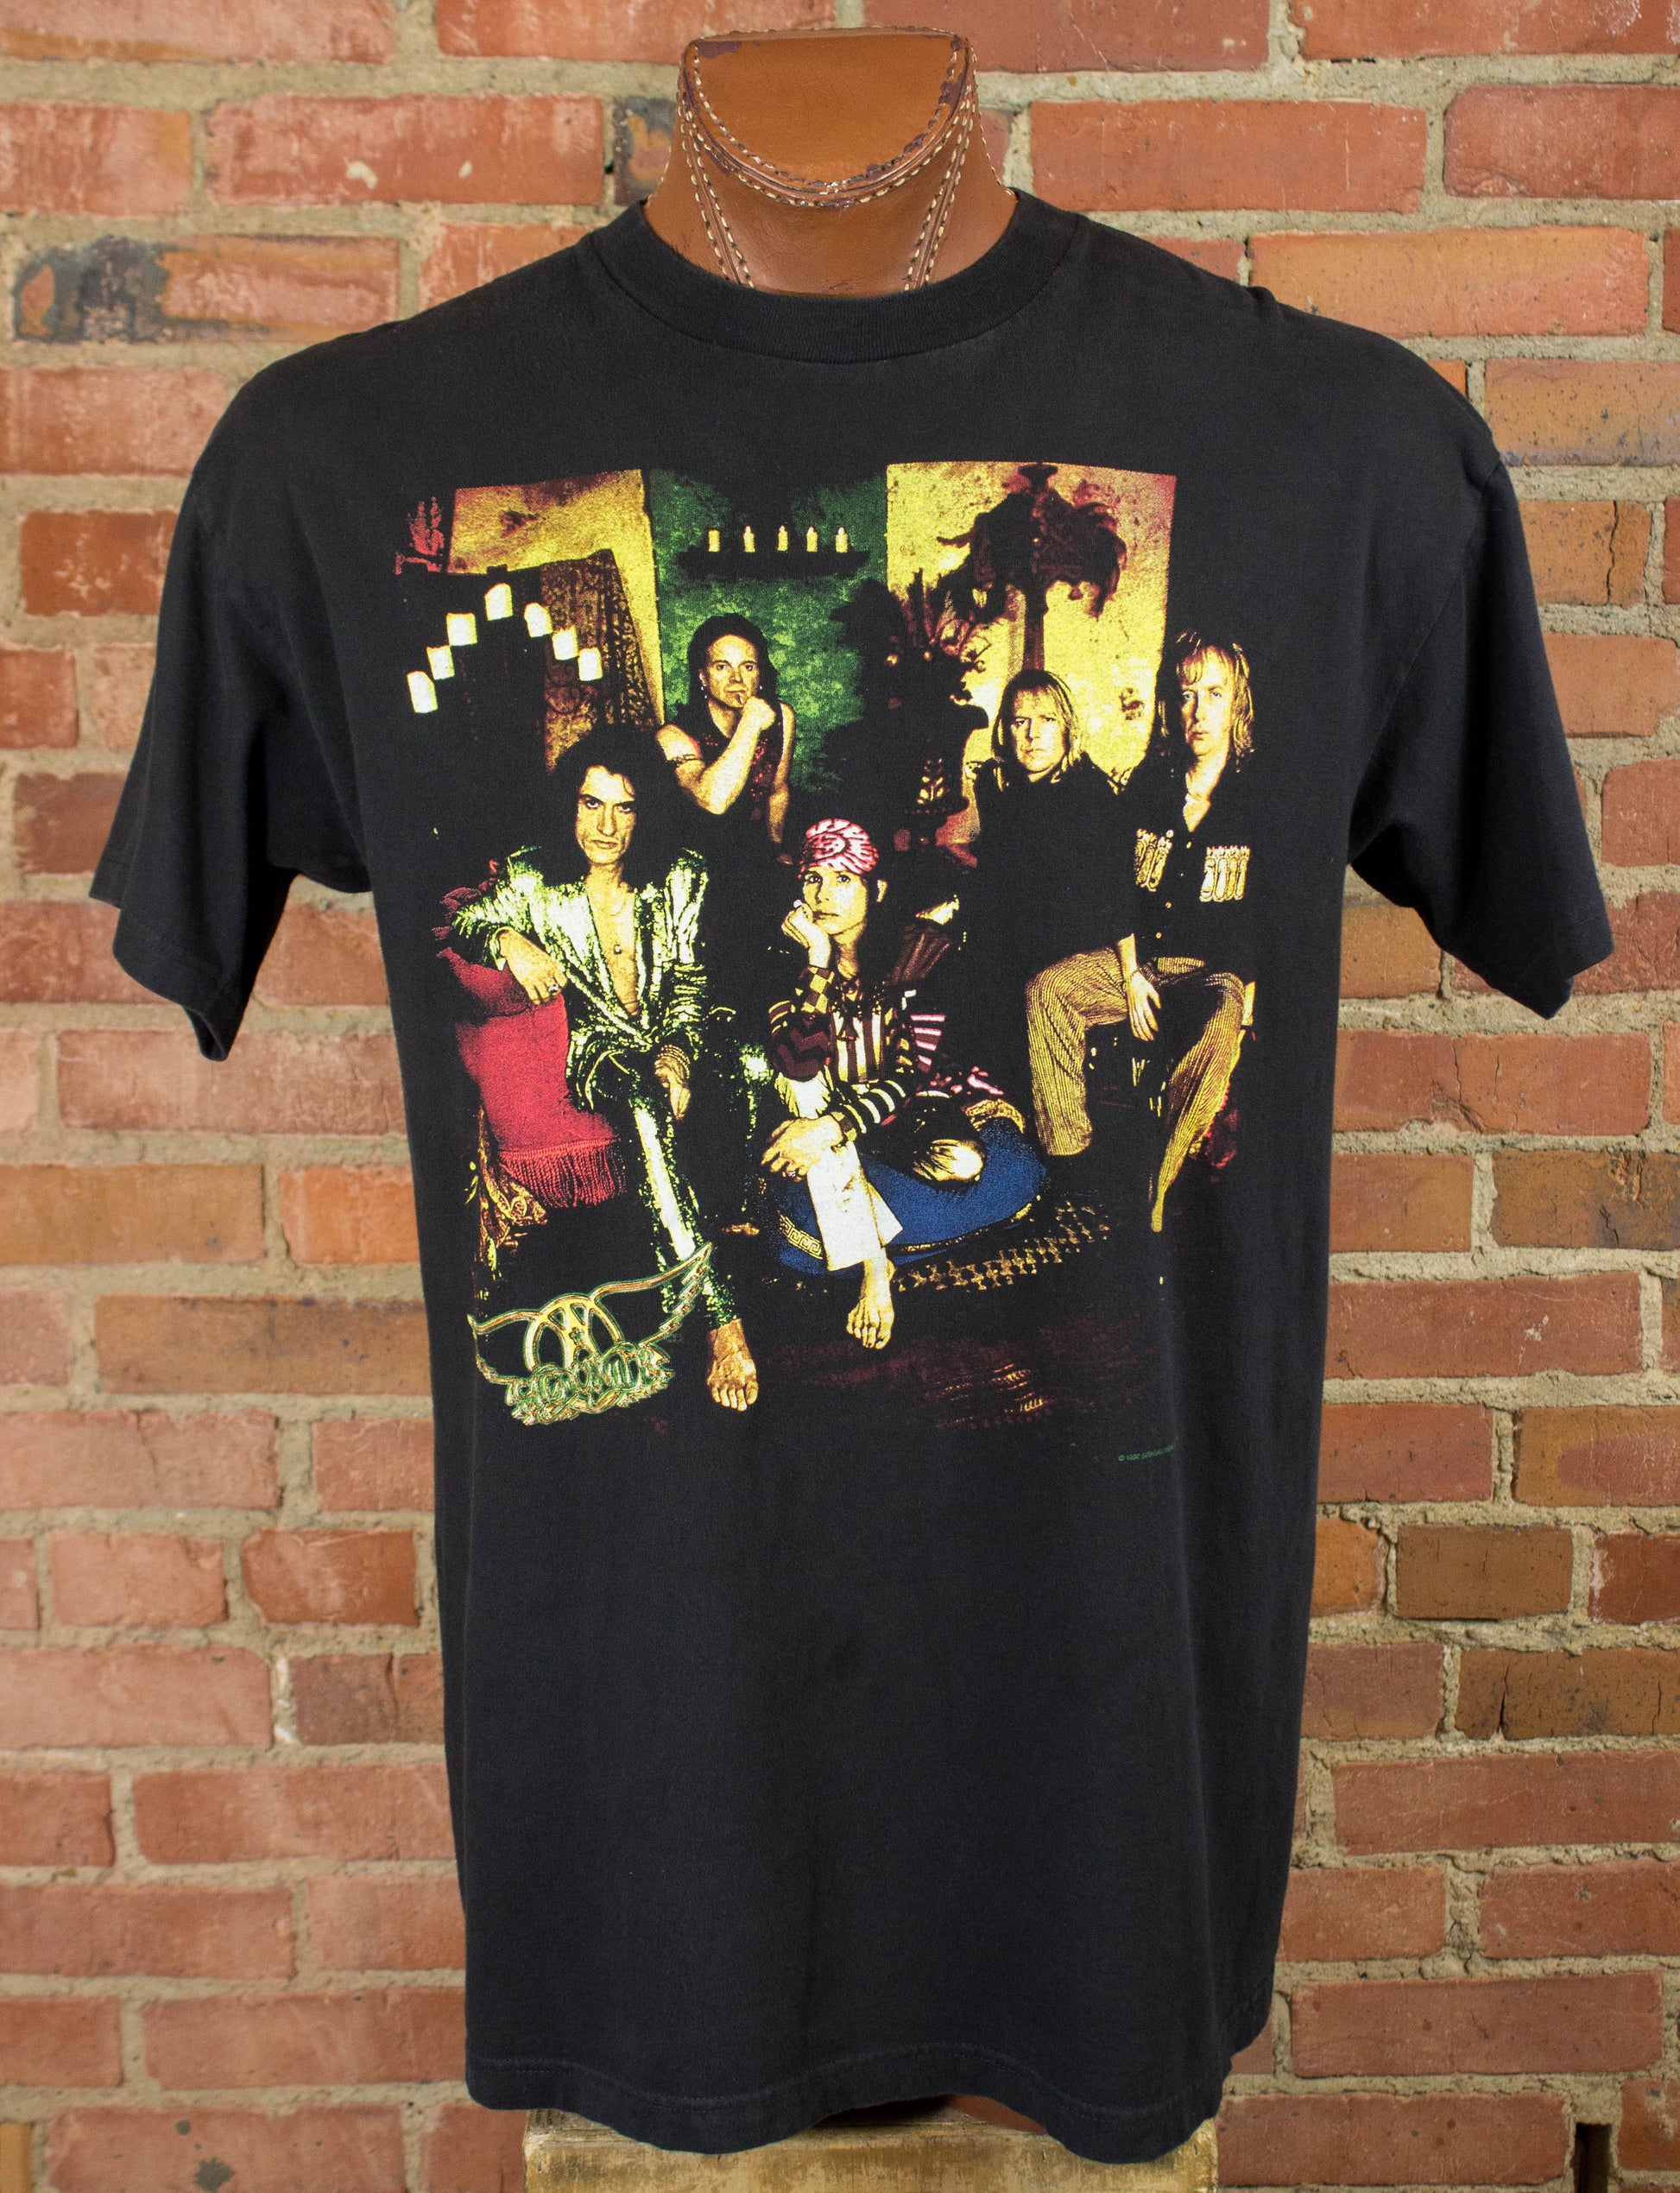 Vintage Aerosmith 1997 Nine Lives North America Tour Black Concert T Shirt Large